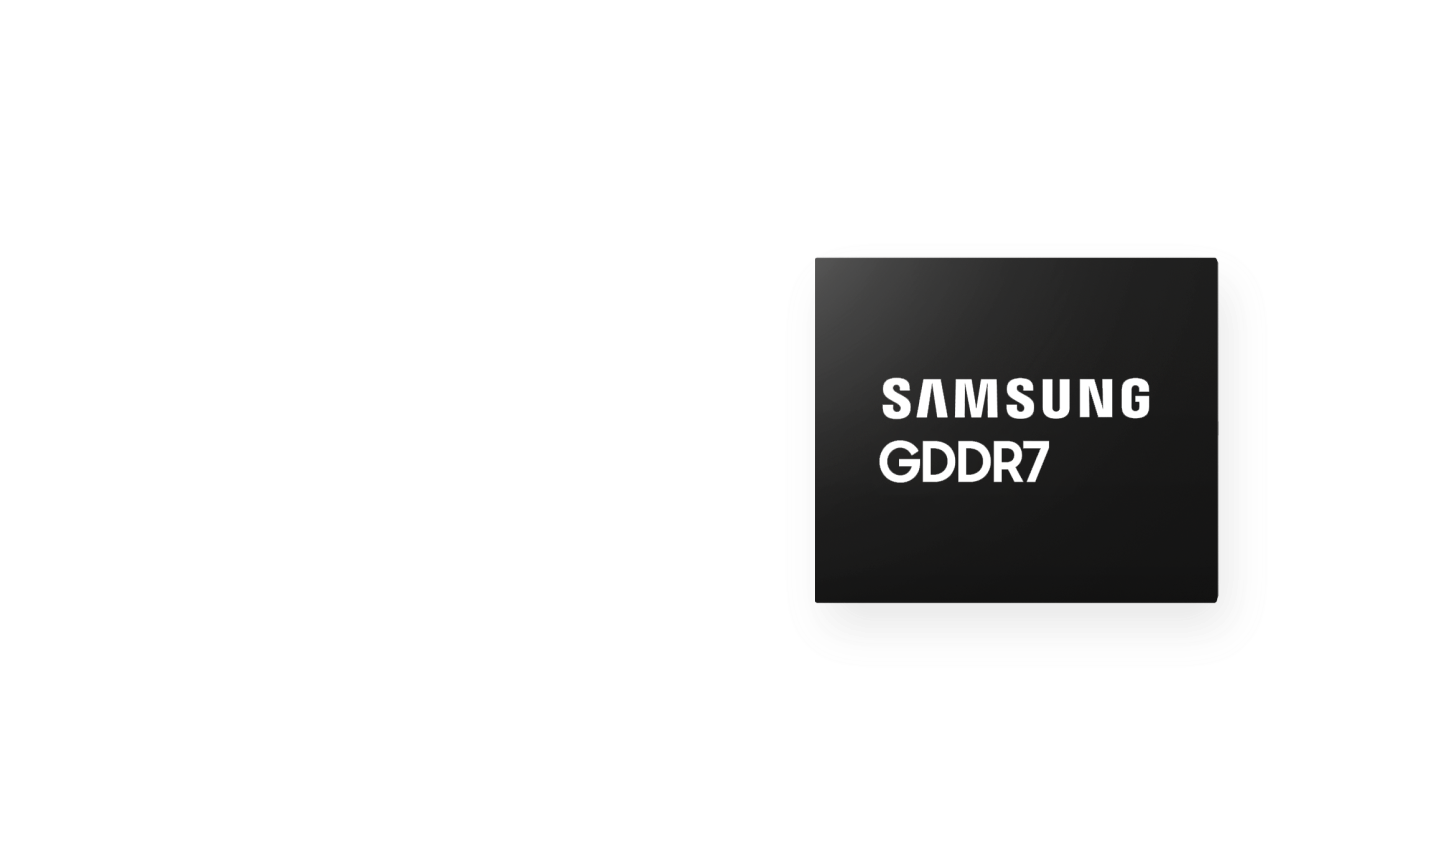  an image of Samsung GDDR7